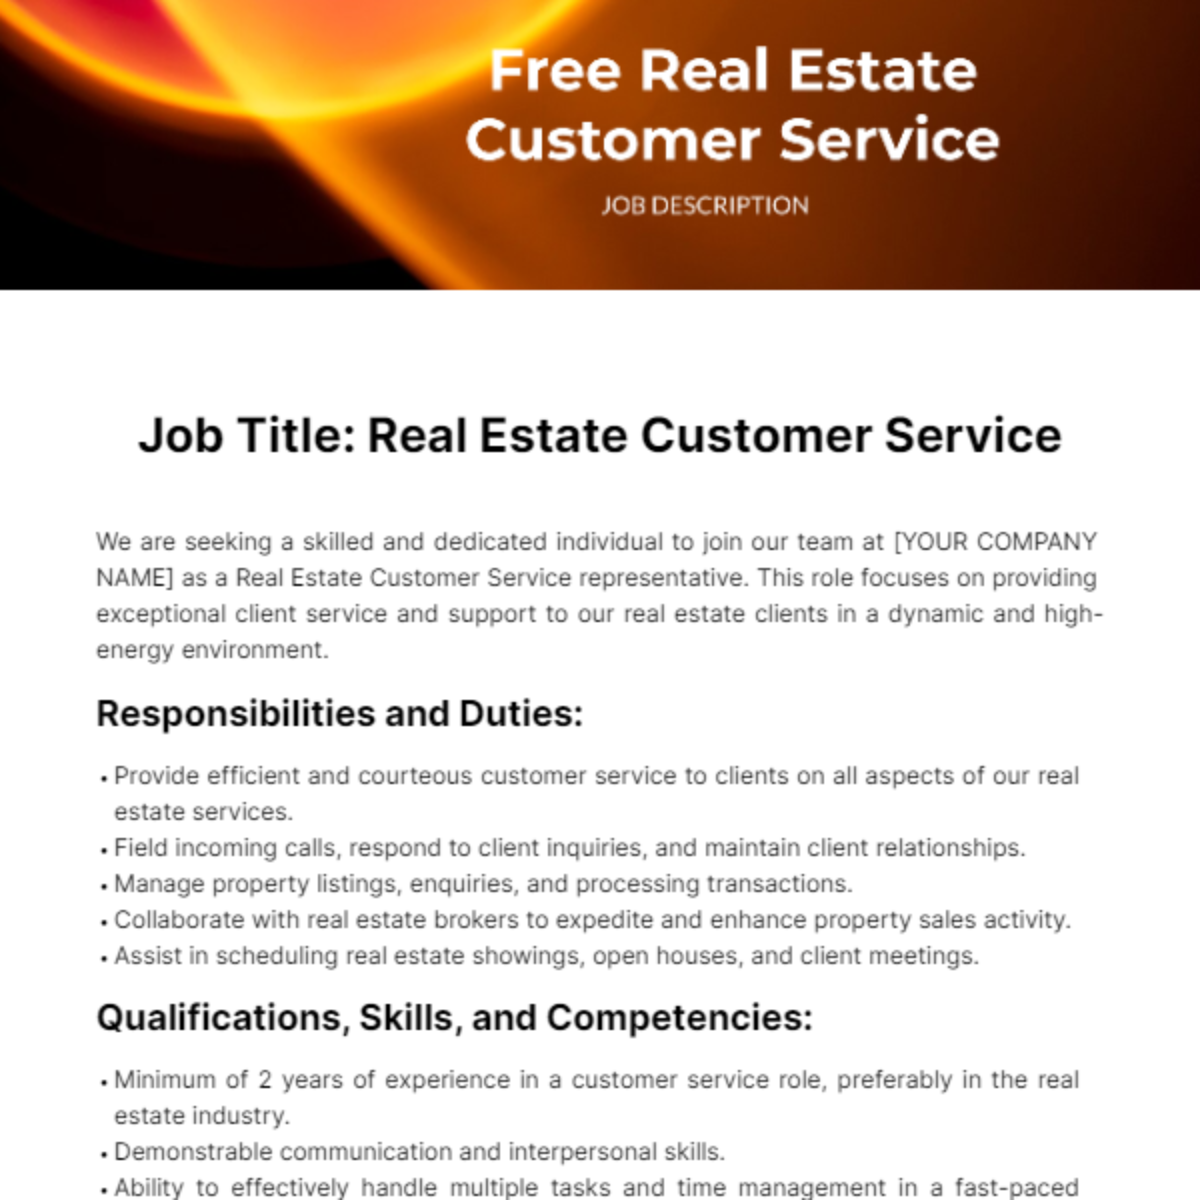 Real Estate Customer Service Job Description Template